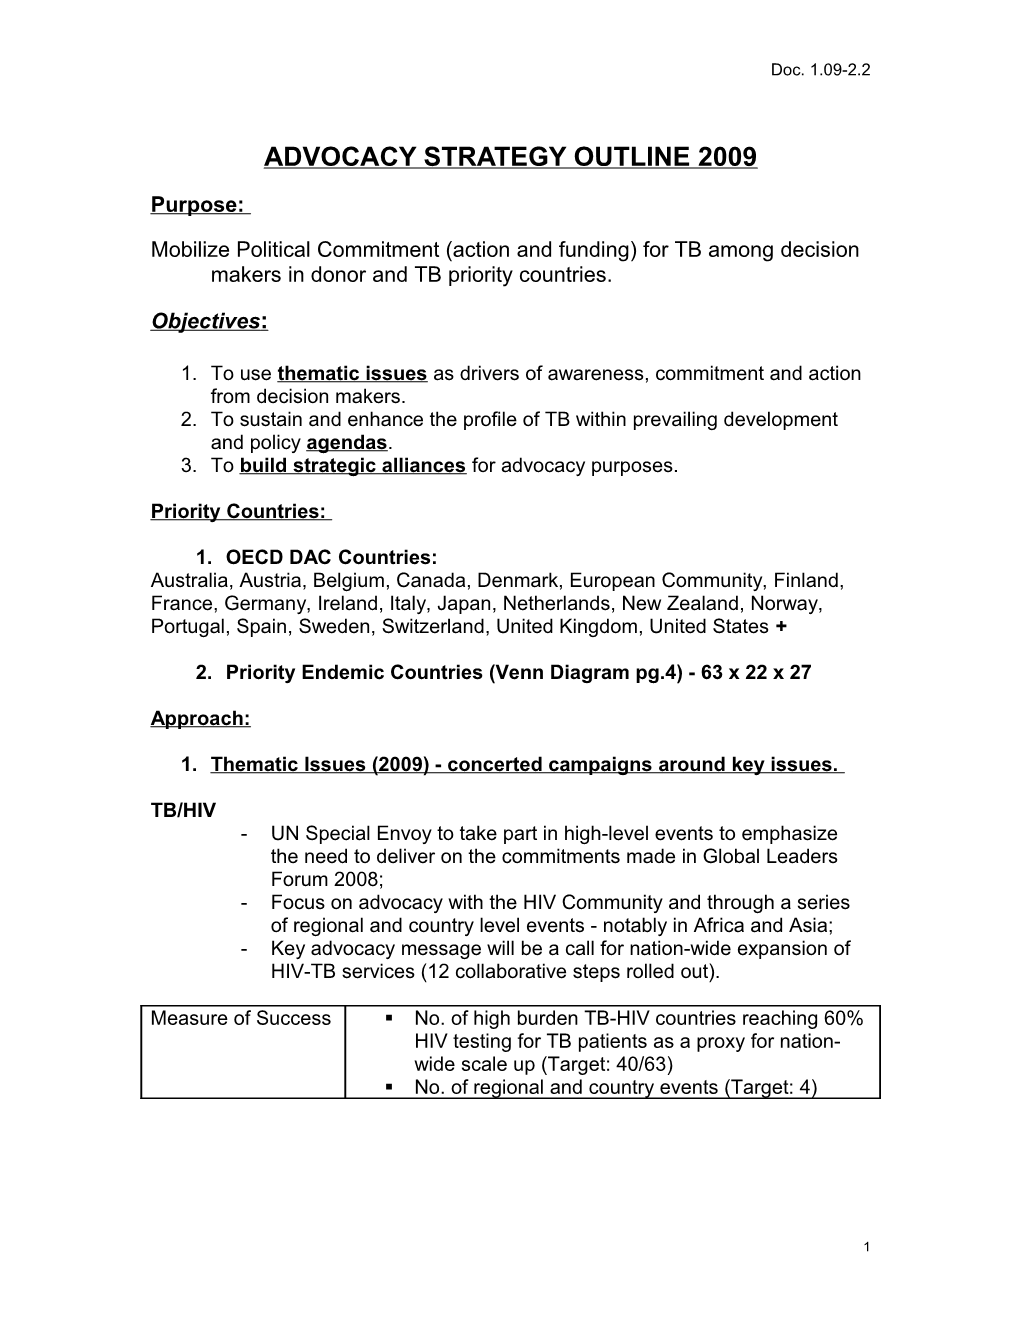 Advocacy Strategy Outline 2009